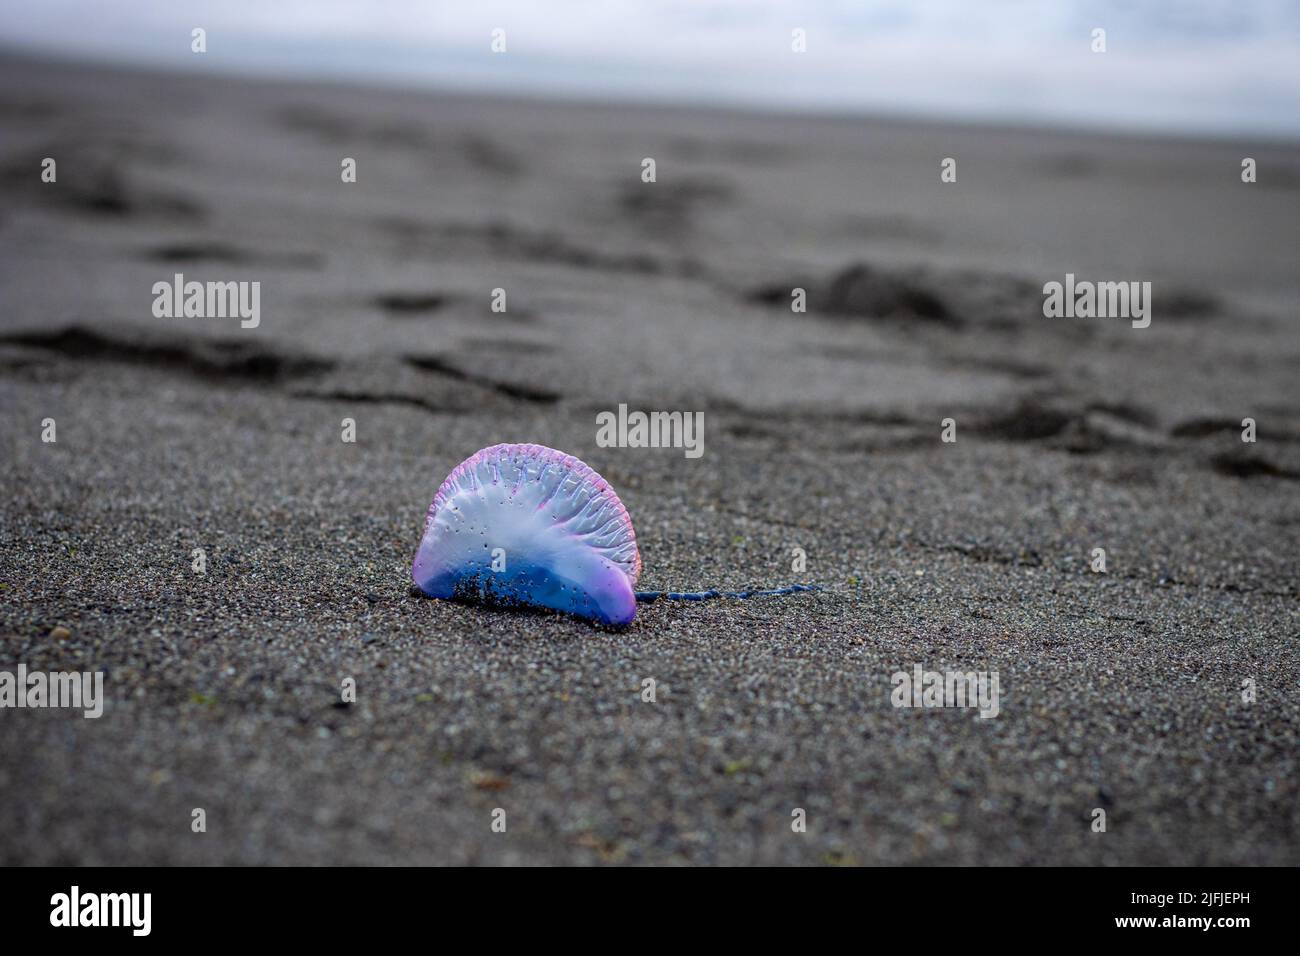 Interesting and dangerous animal on beach, portuguese man'o'war, beautiful jellyfish. Stock Photo